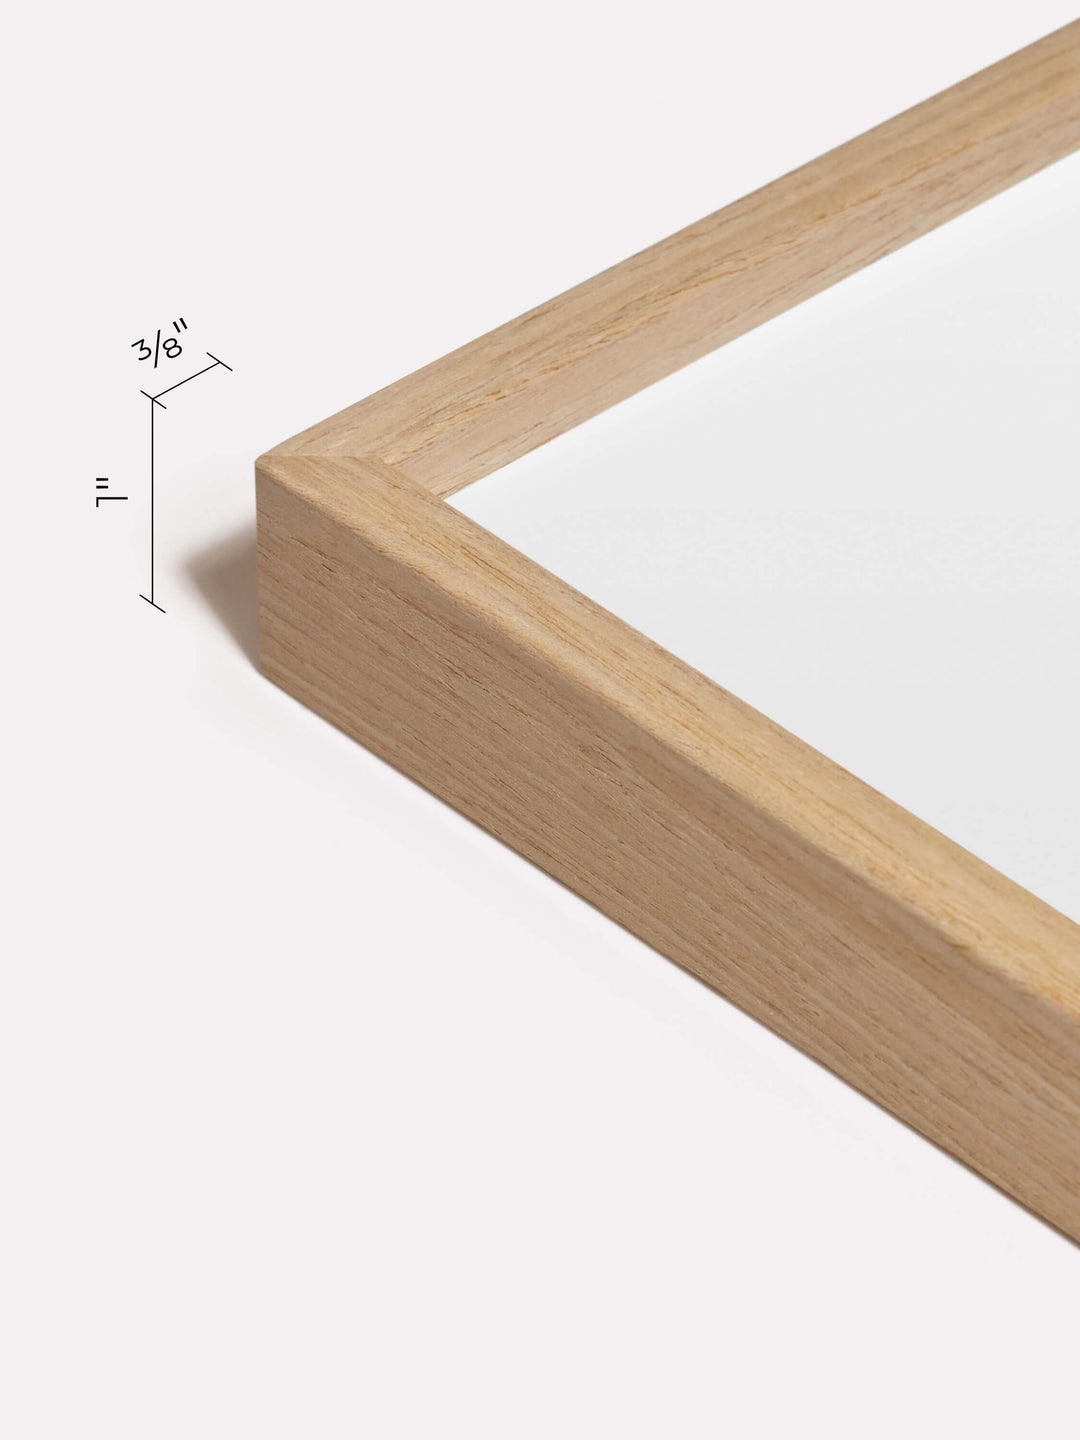 12x18-inch Thin Frame, Oak - Close-up view